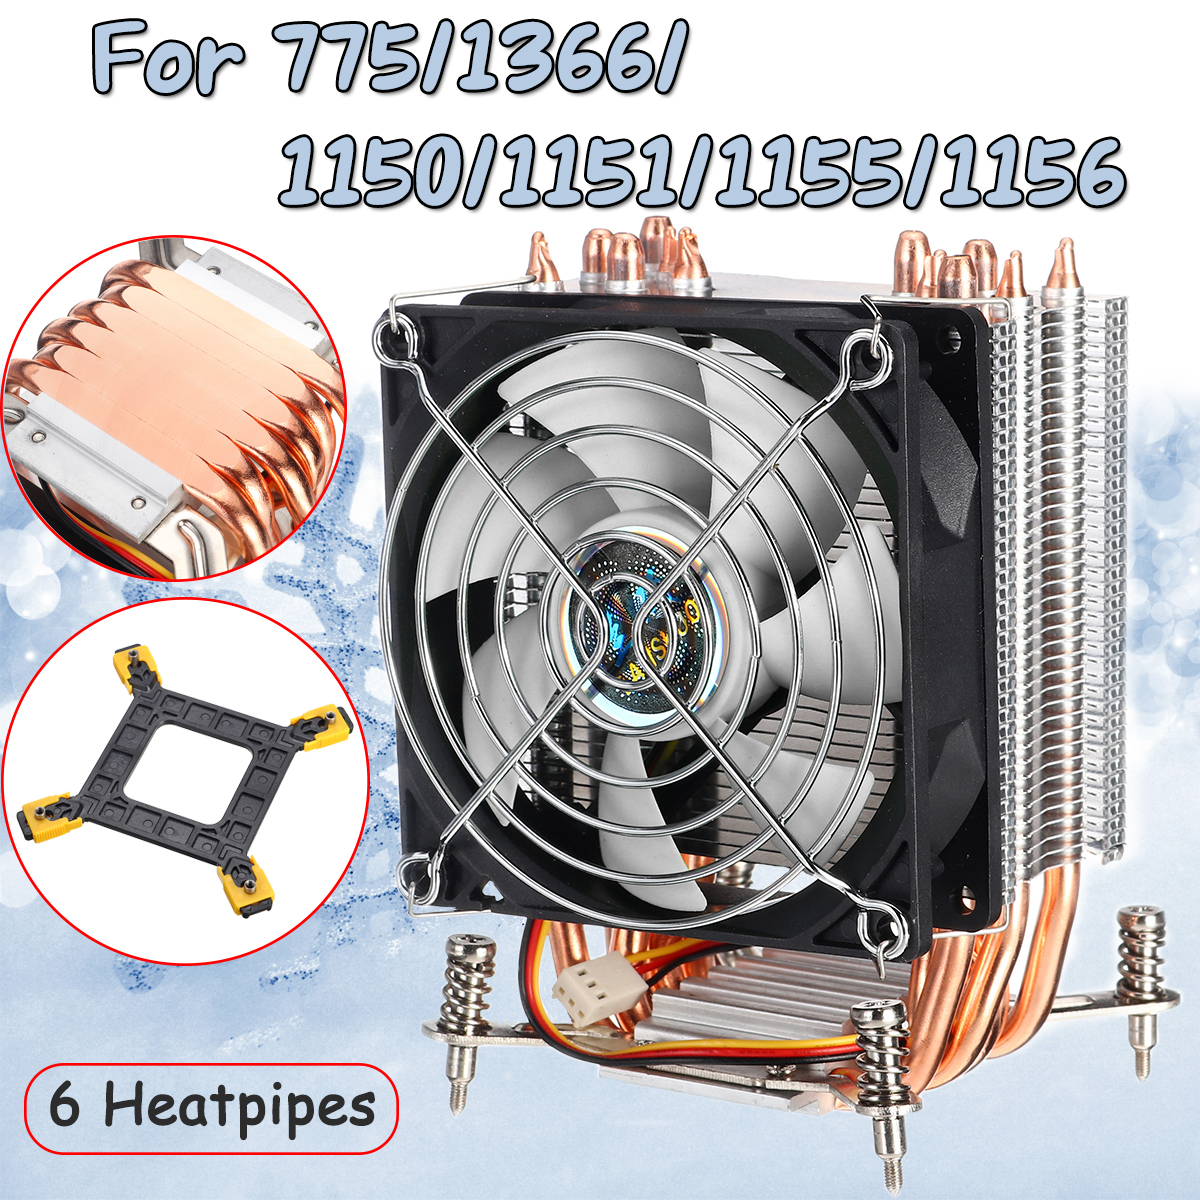 3 Pin 90cm 6 Heat Pipes Cooler Cooling Fan Heatsink for 115X 1366 Motherboard 8